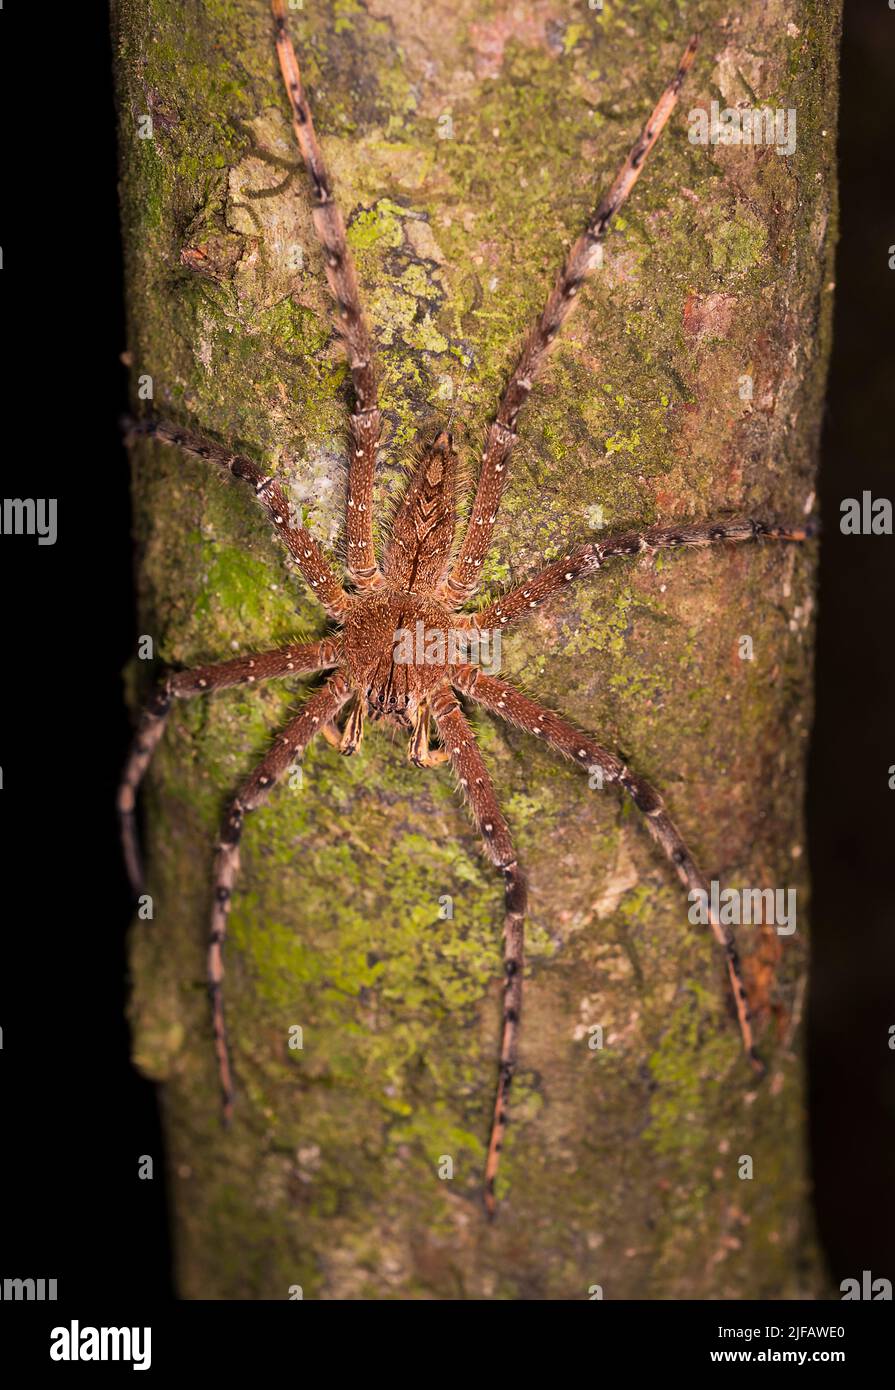 Huntsman spider (Heteropoda sp.?) from Kinabatangan River area, Sabah, Borneo Stock Photo